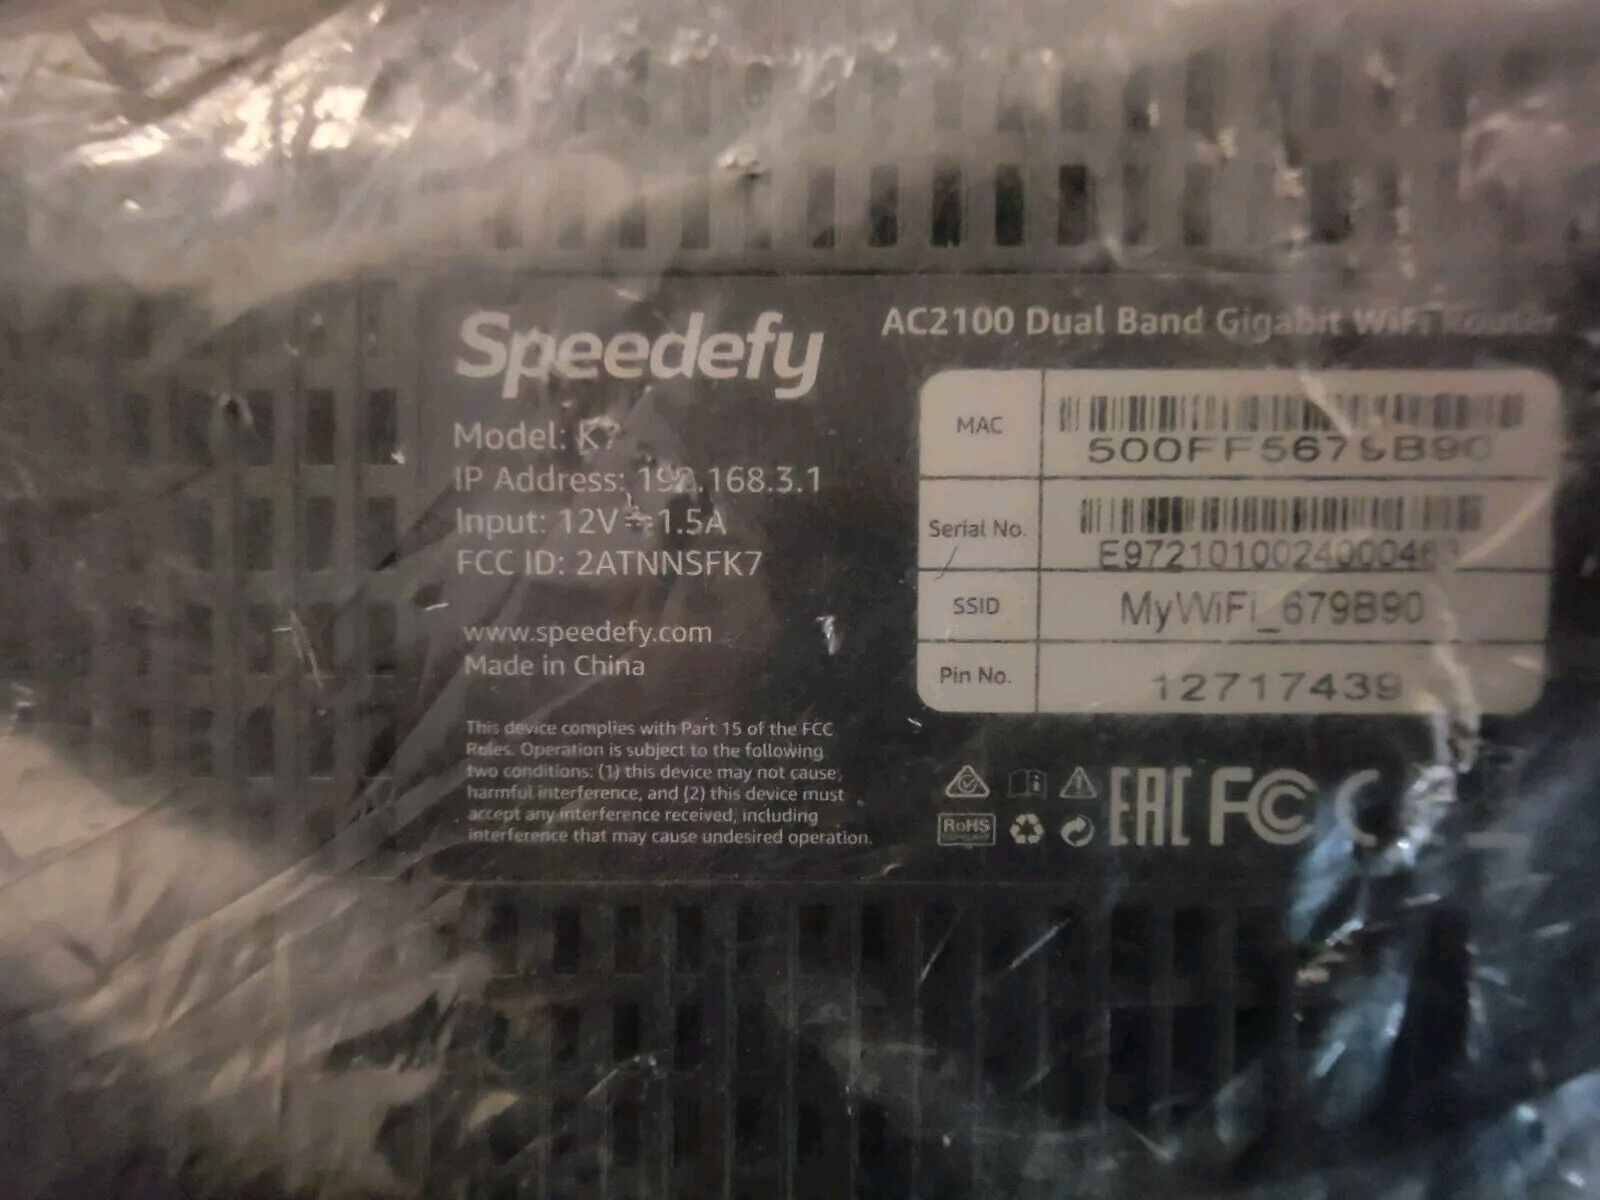 Speedefy AC2100 Smart WiFi Router, Dual Band, Model K7 